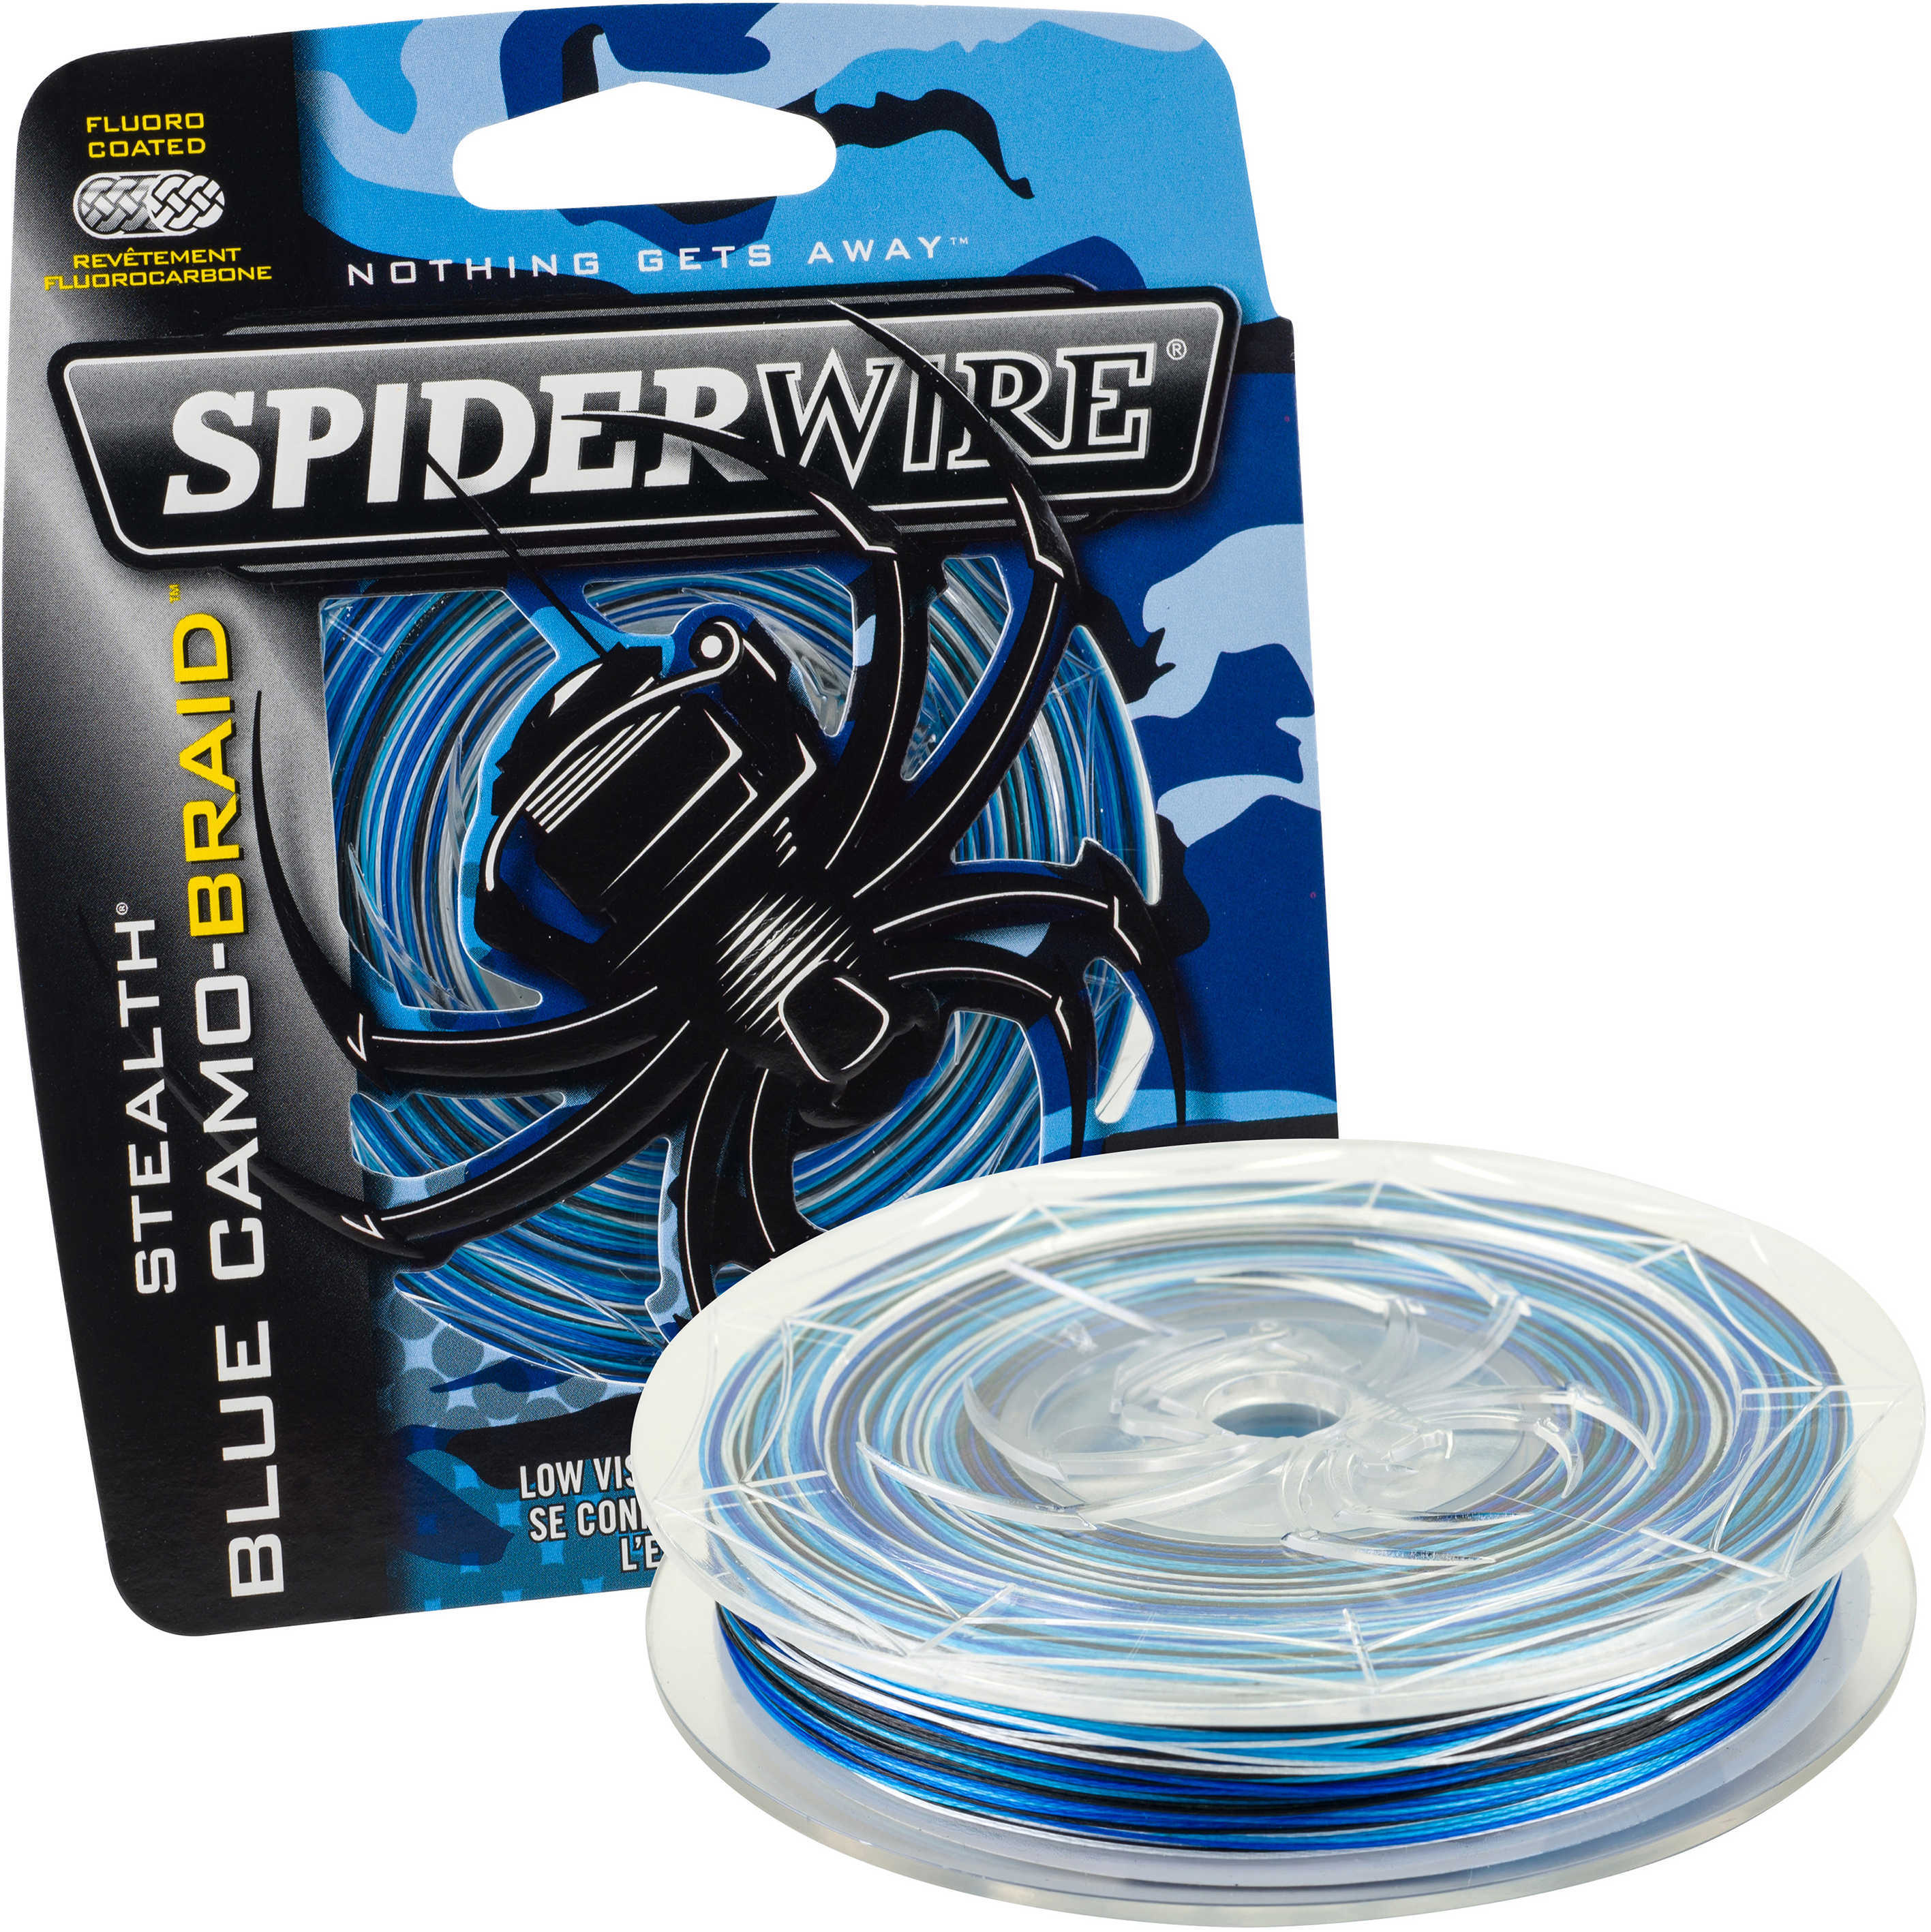 Spiderwire Stealth Braid 125 Yards , 65 lbs Strength, 0.015" Diameter, Blue Camo Md: 1370442